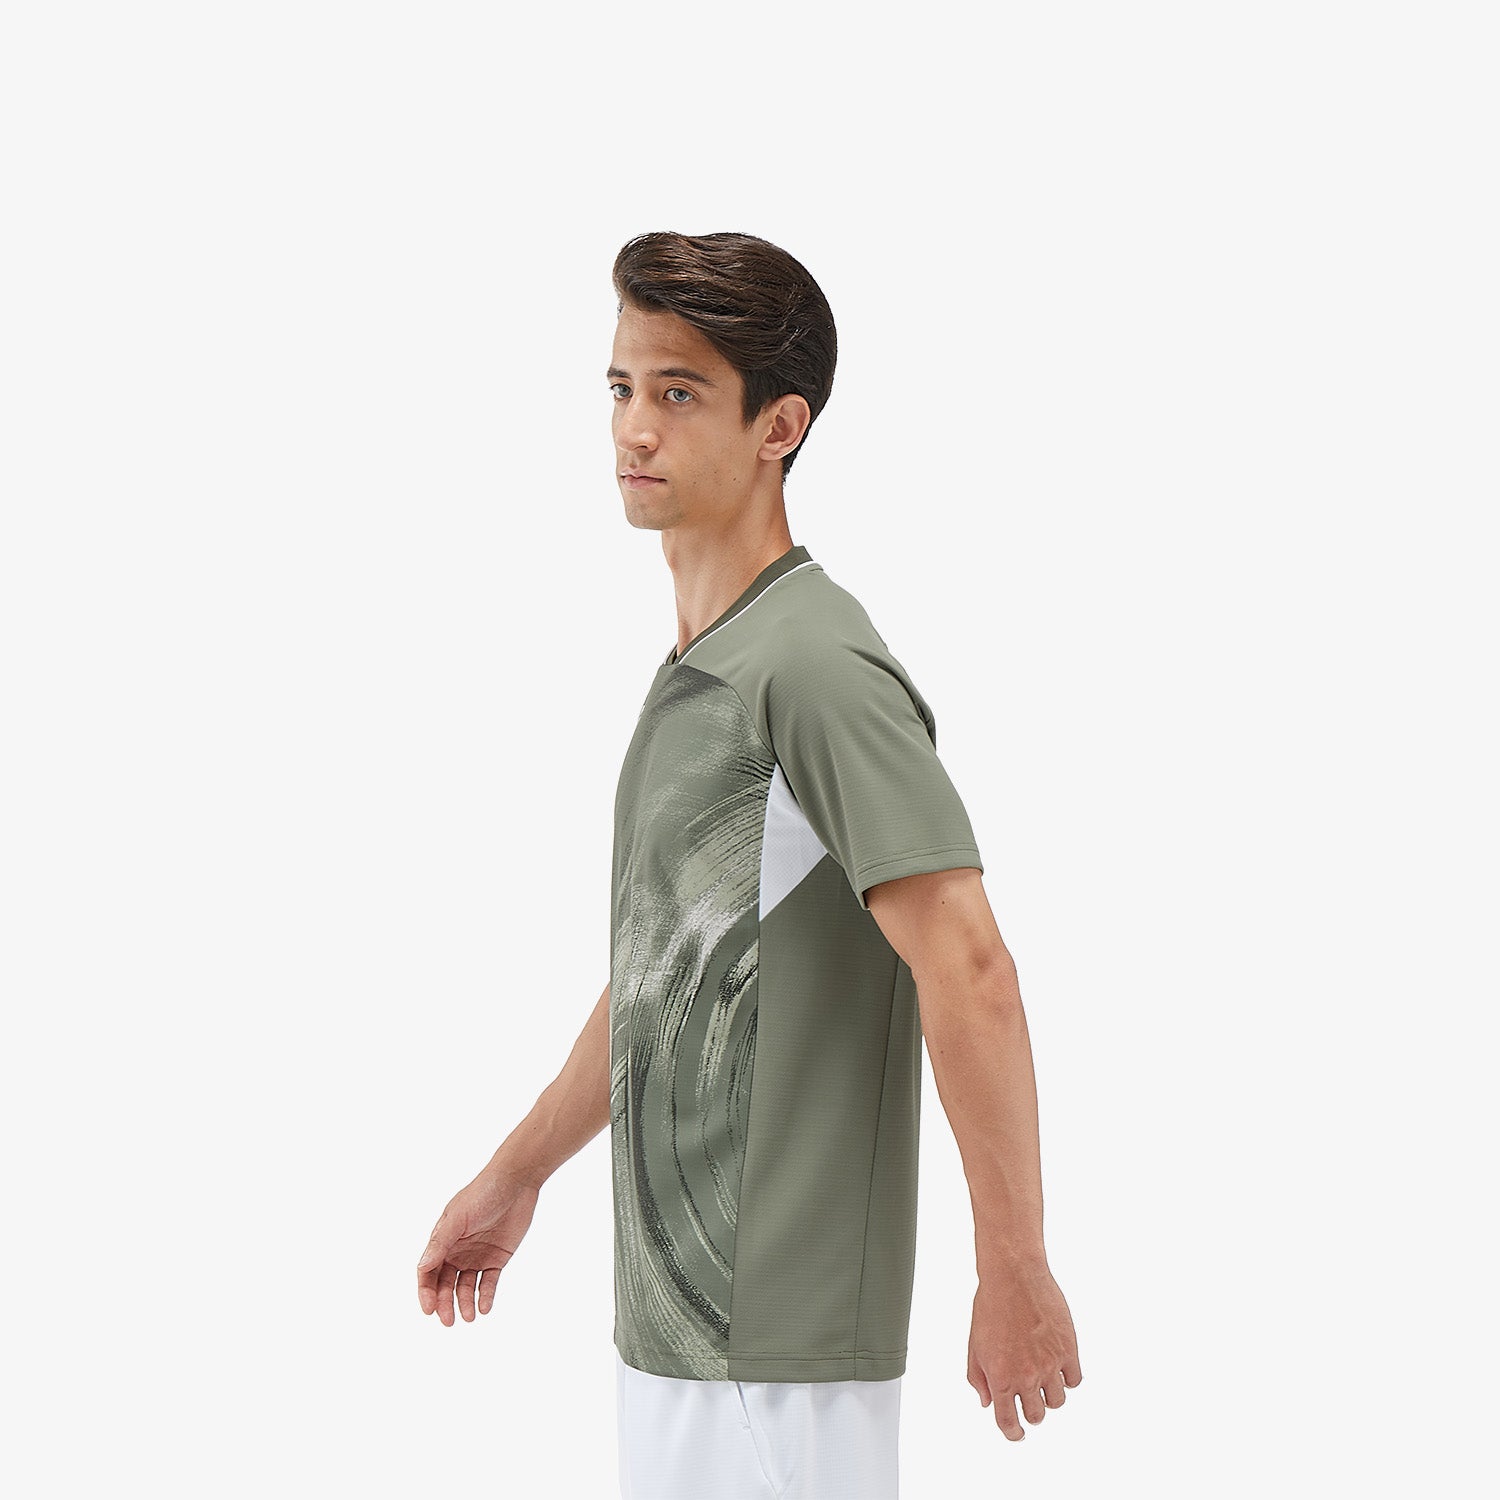 Yonex Men's Crew Neck Tournament Shirt 10568LOL (Light Olive)